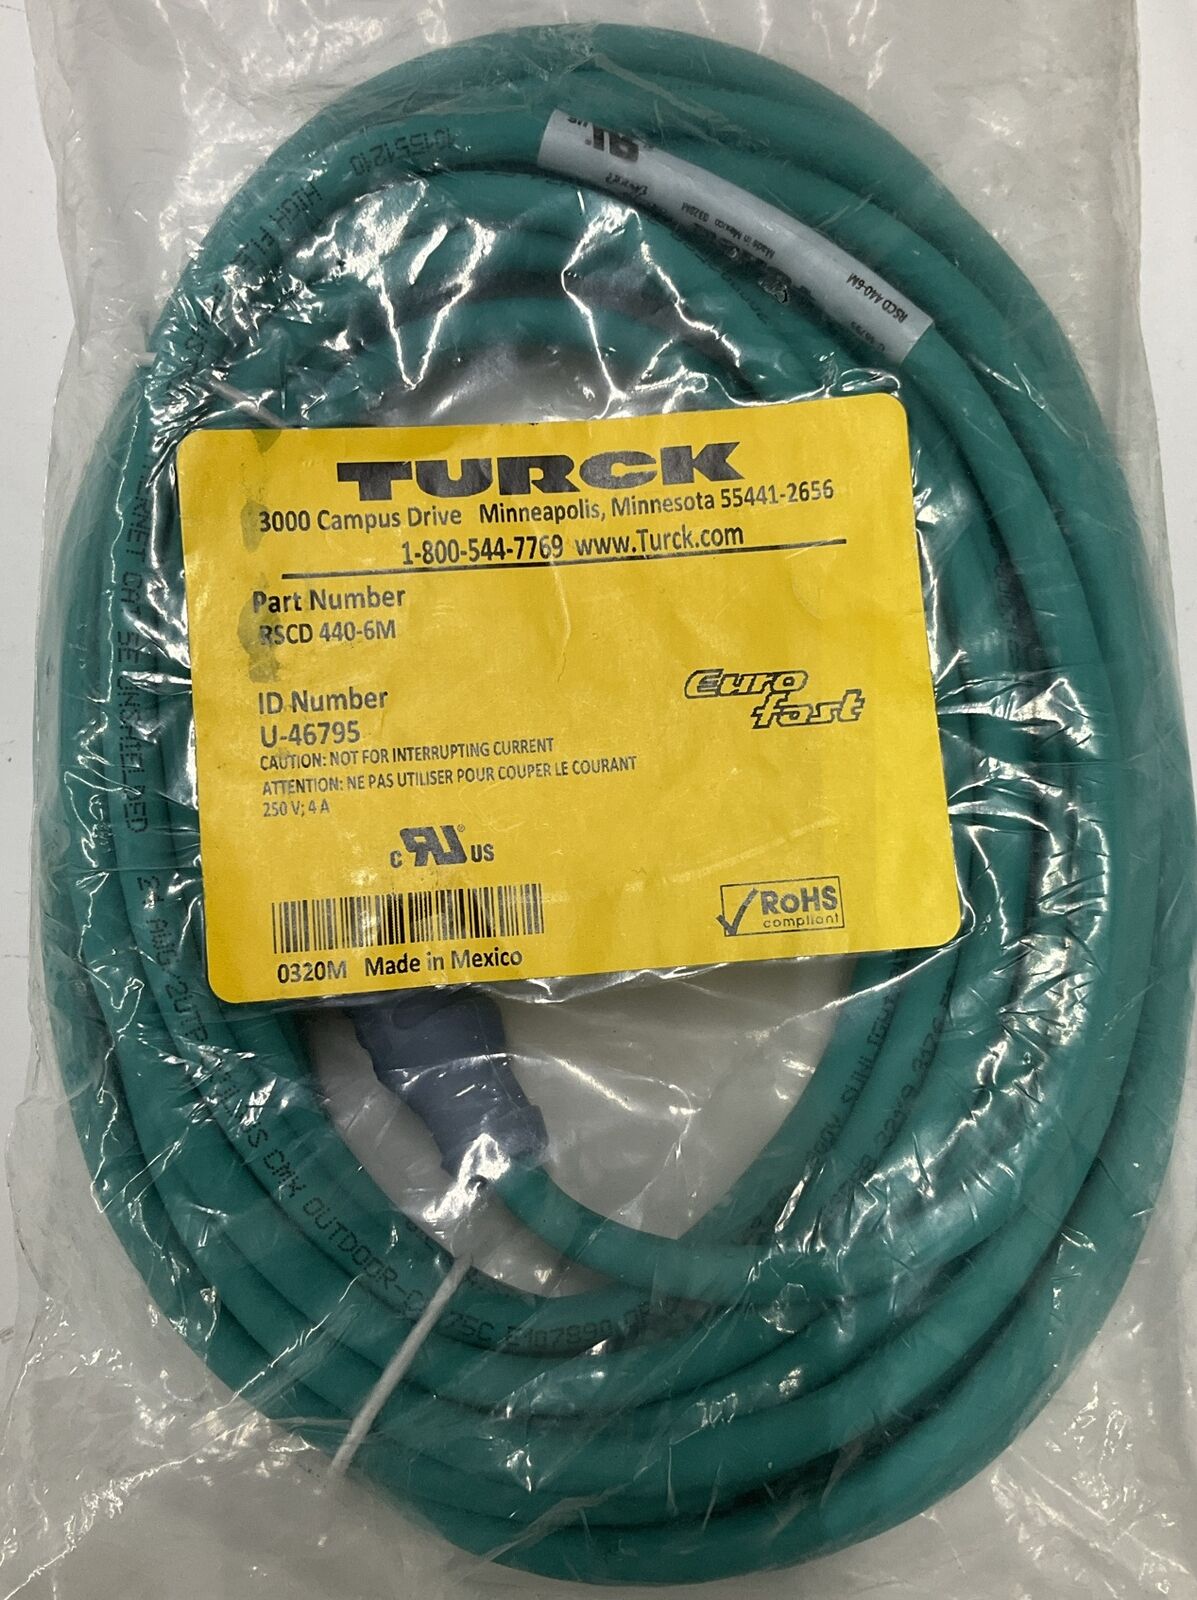 Turck RSCD 440-6M U46795 EuroFast Network Cable Male to 4-Wire (CBL154) - 0